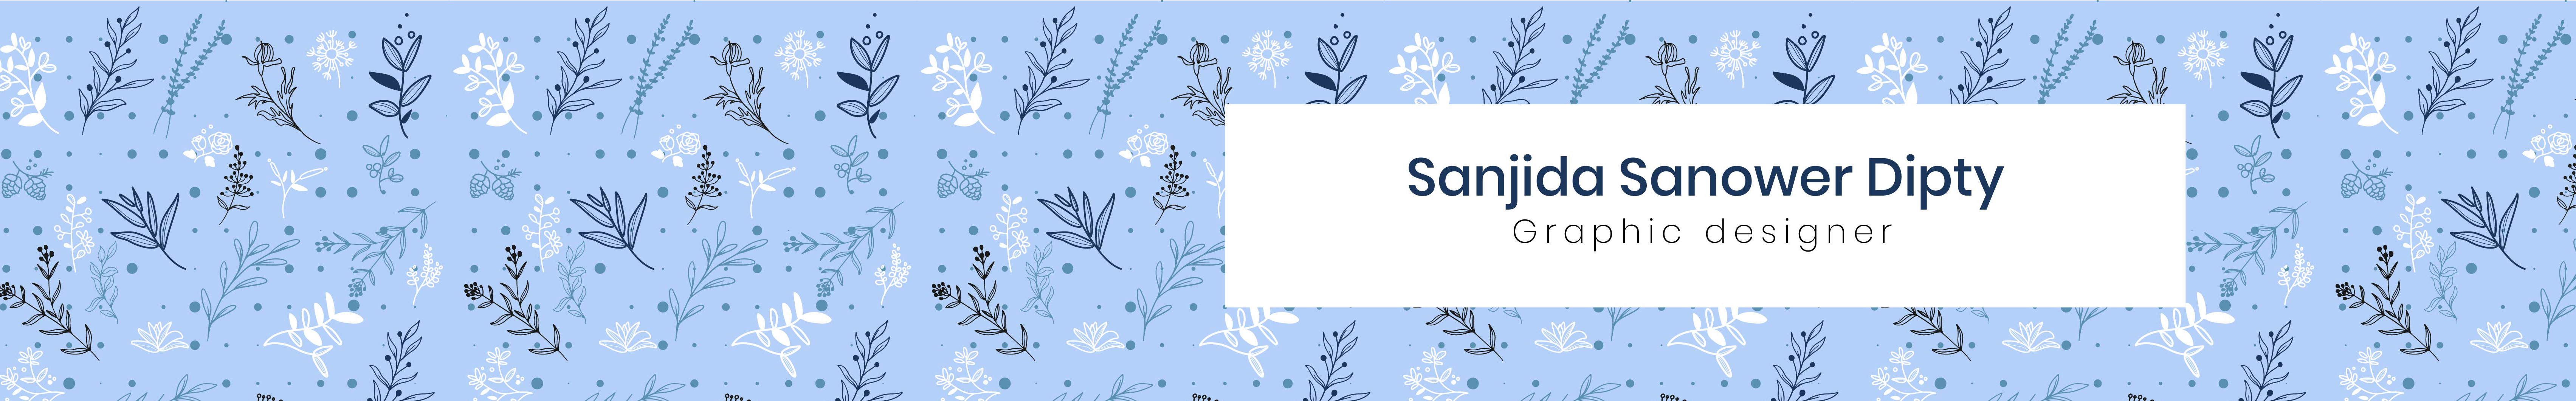 Banner de perfil de Sanjida Sanower Dipty